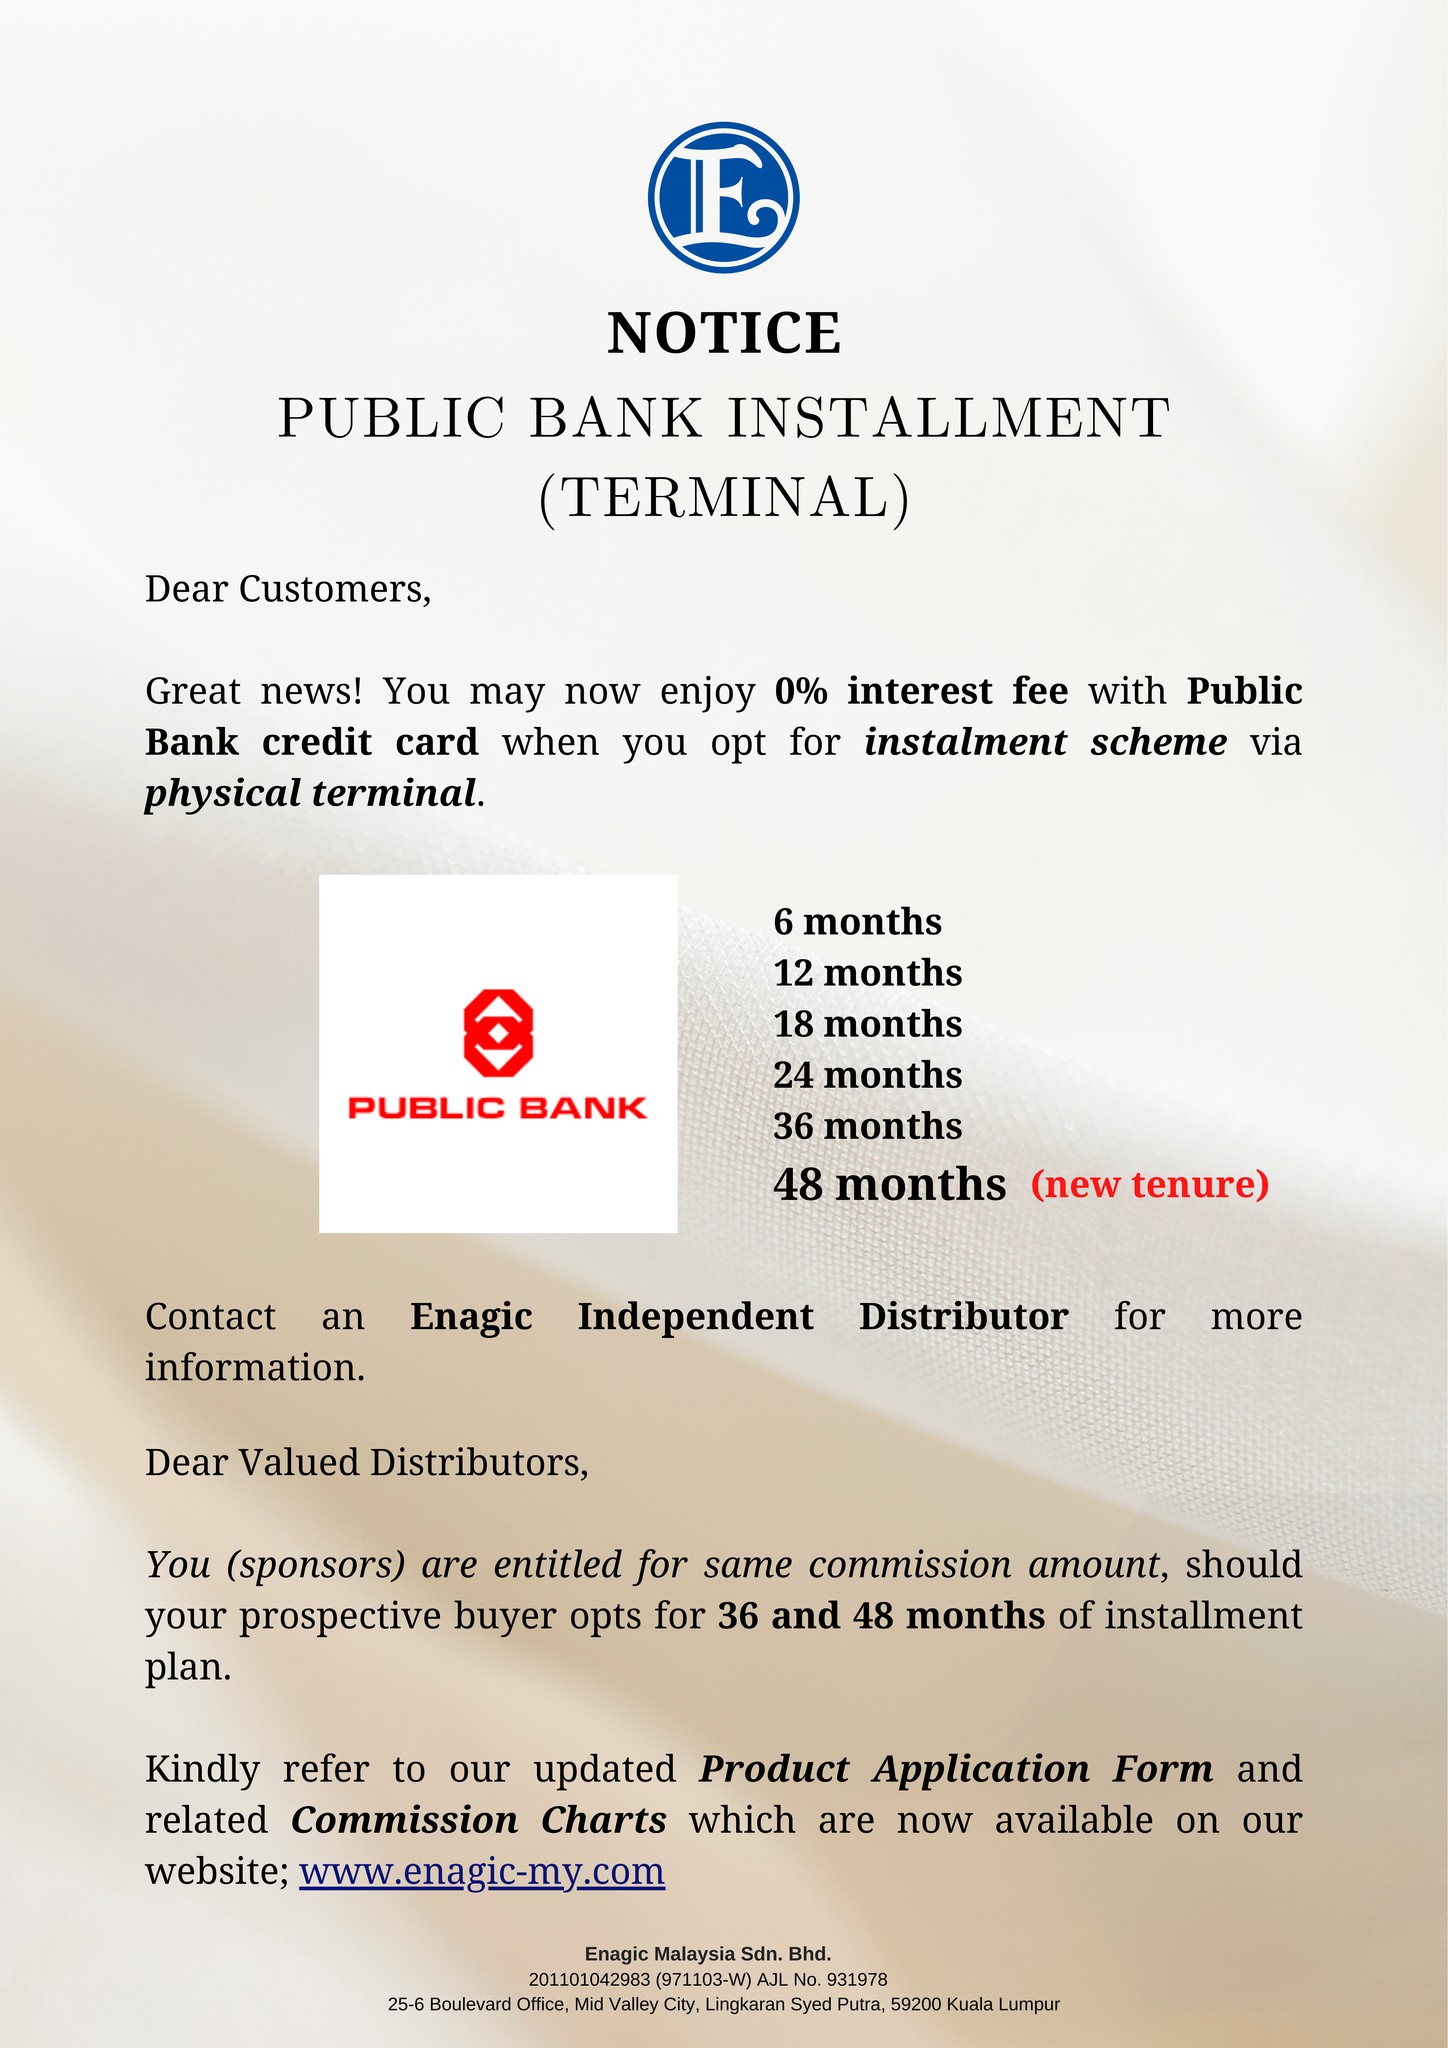 NOTICE | Public Bank Installment – New Tenure (48 Months)